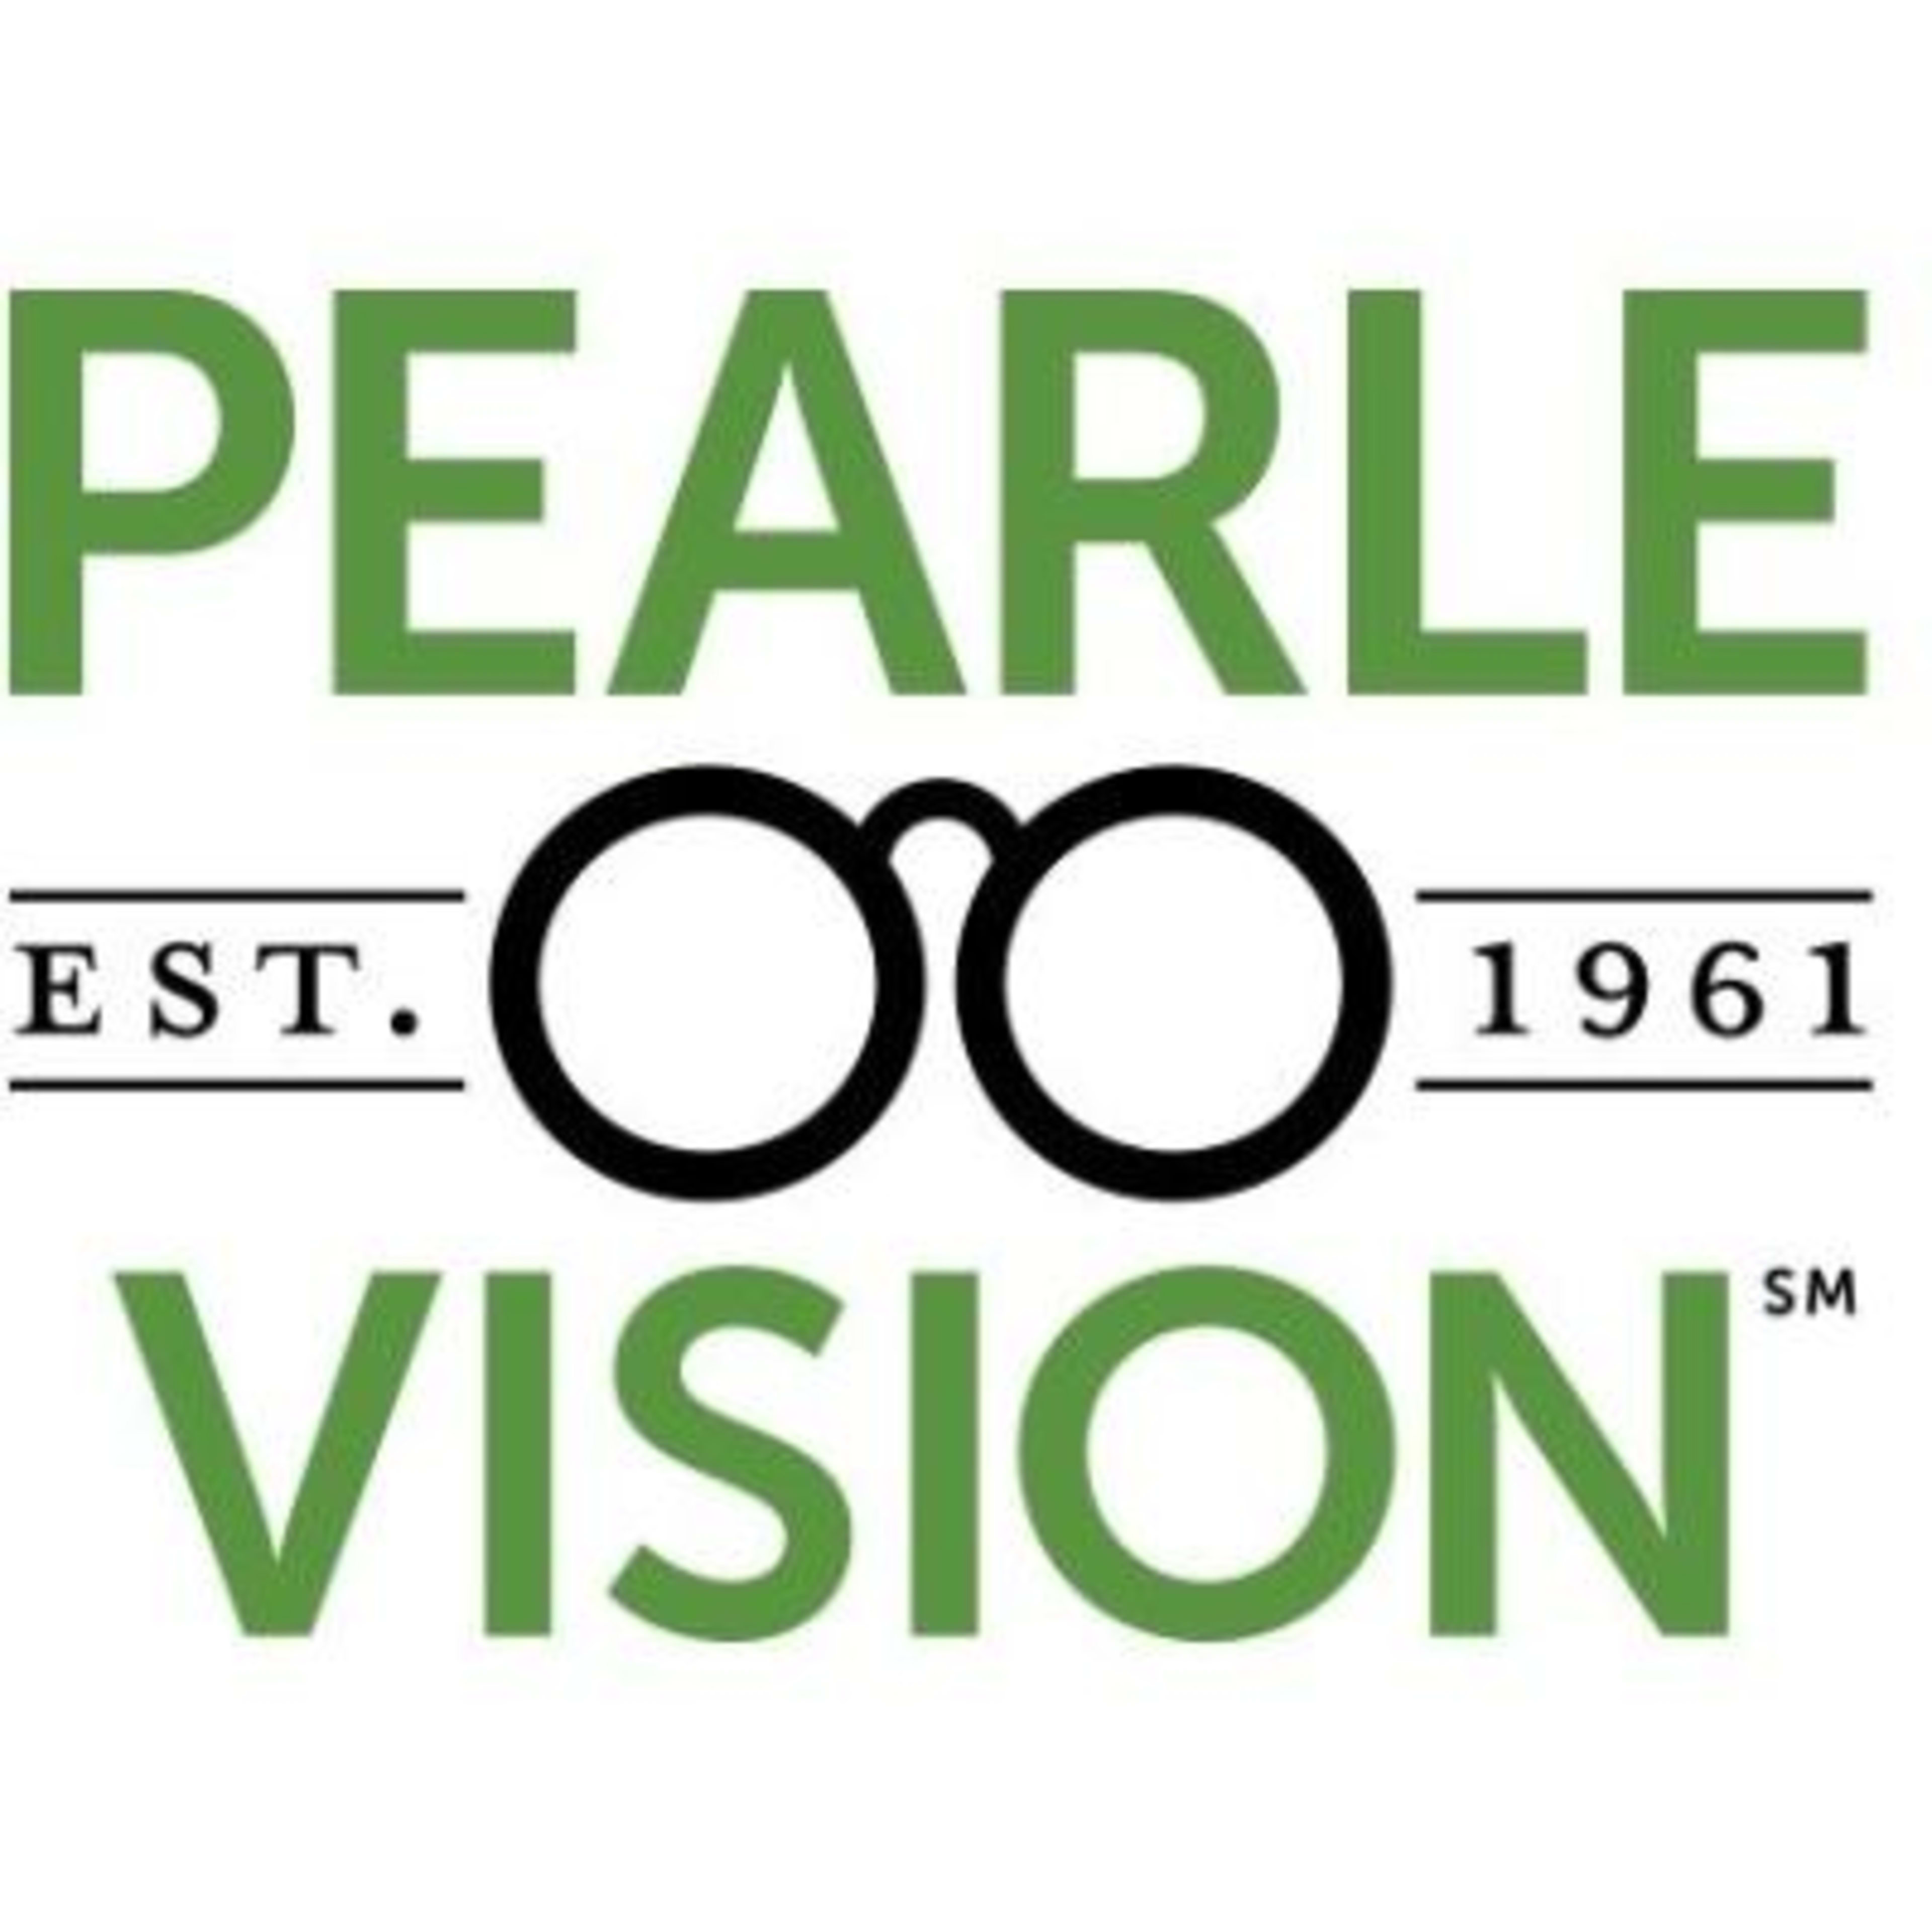 Pearle VisionCode